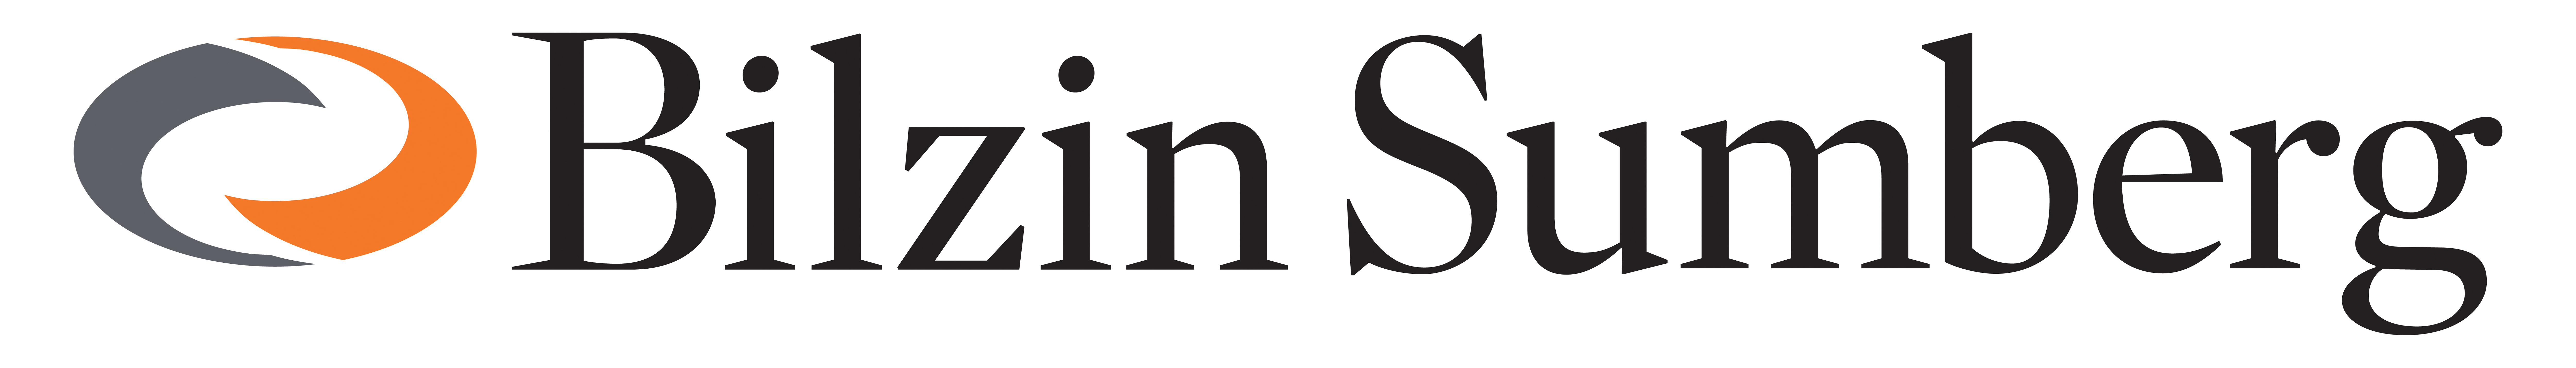 Bilzin logo